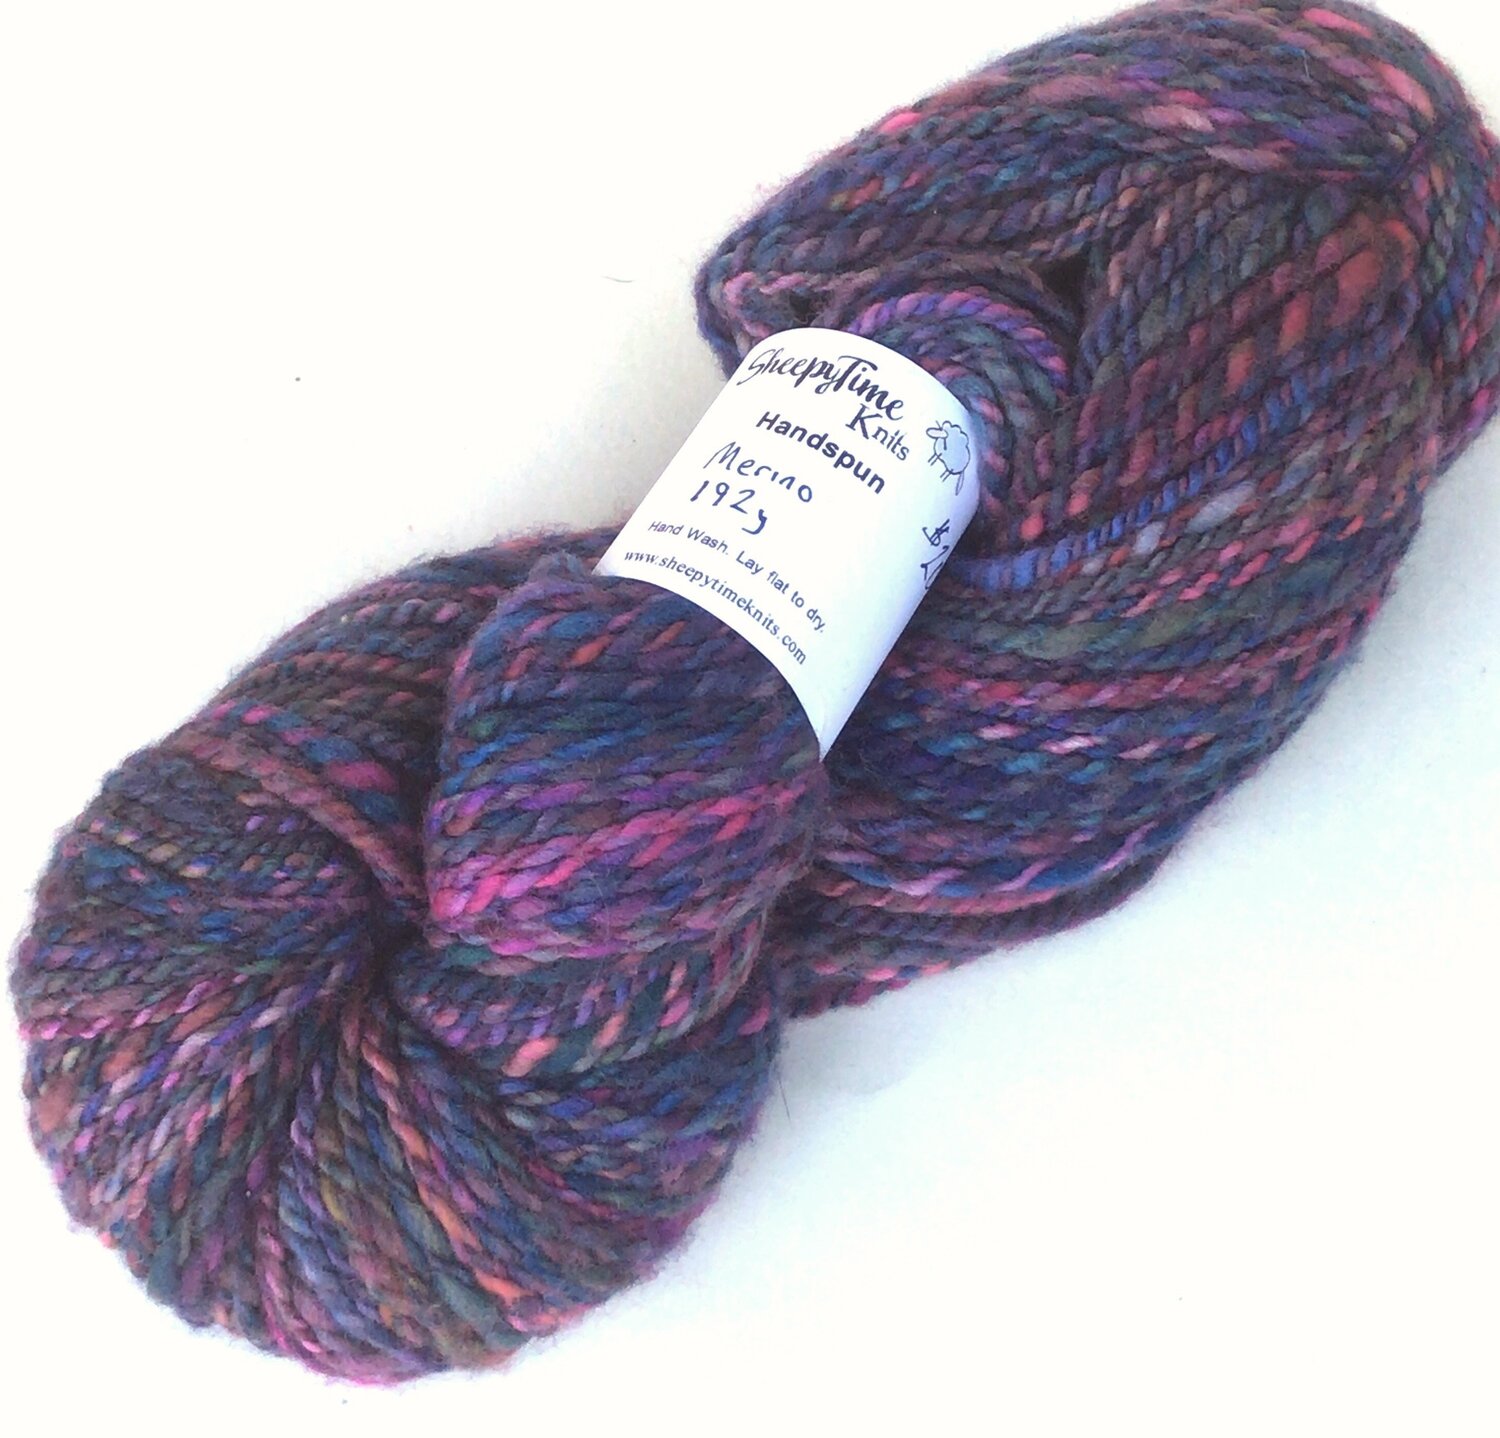 Handspun Bulky Thick n Thin Yarn 108 yards 8.1 ounces – Deep Dyed Yarns